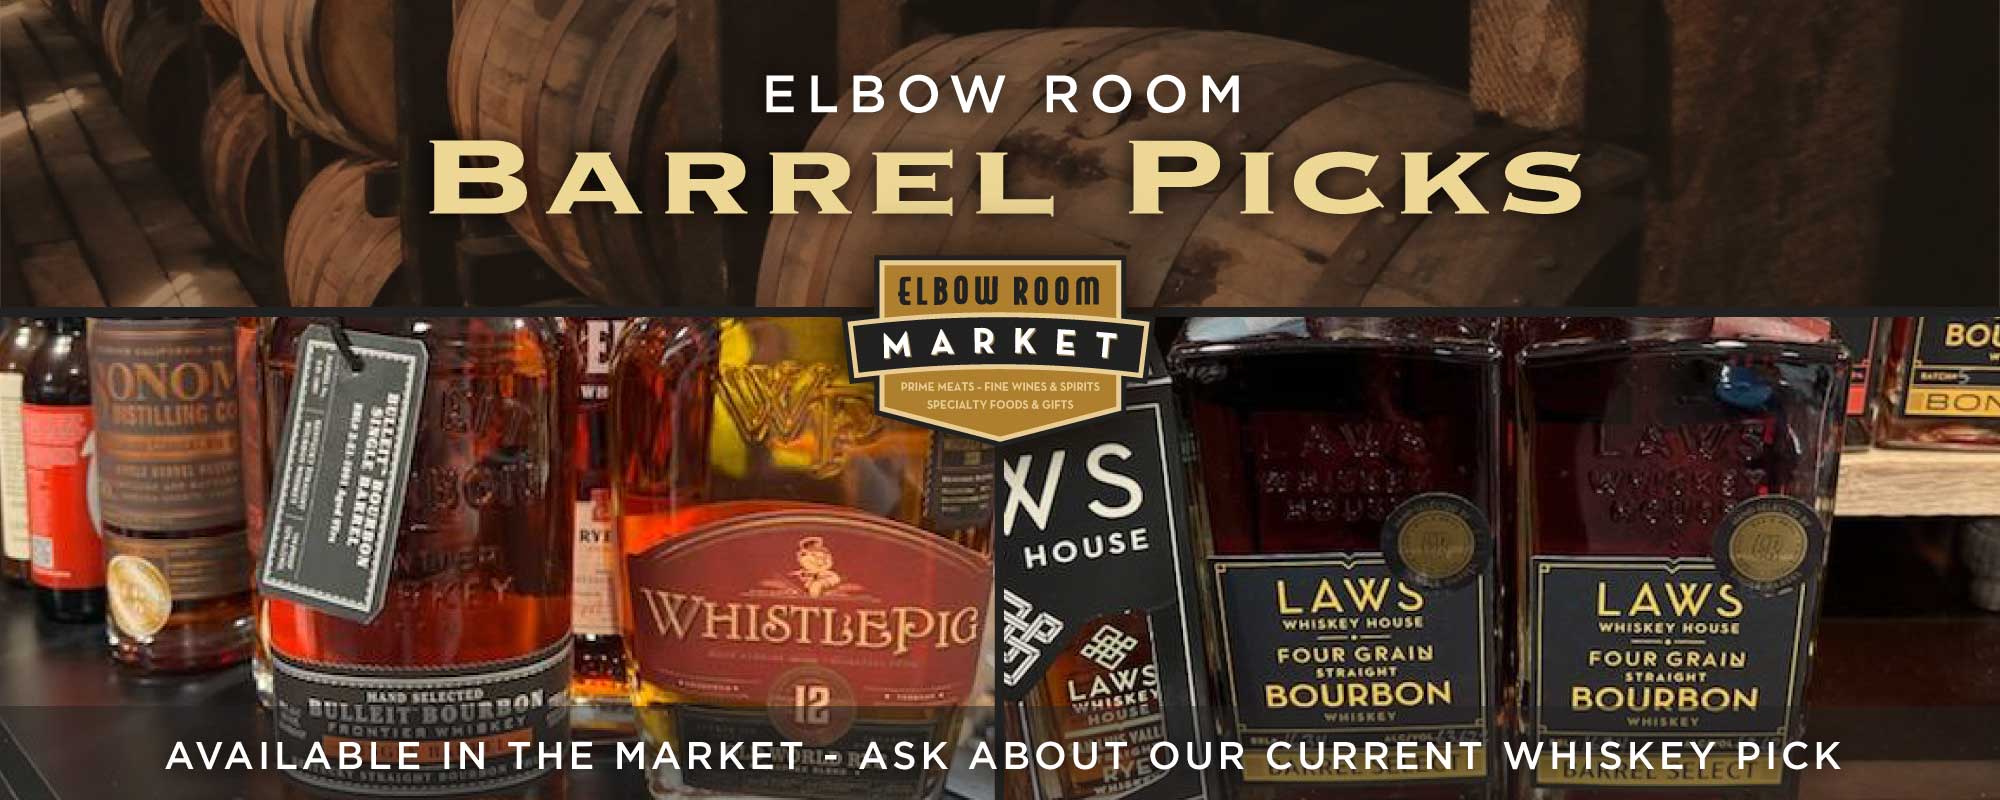 Elbow Room Barrel Picks